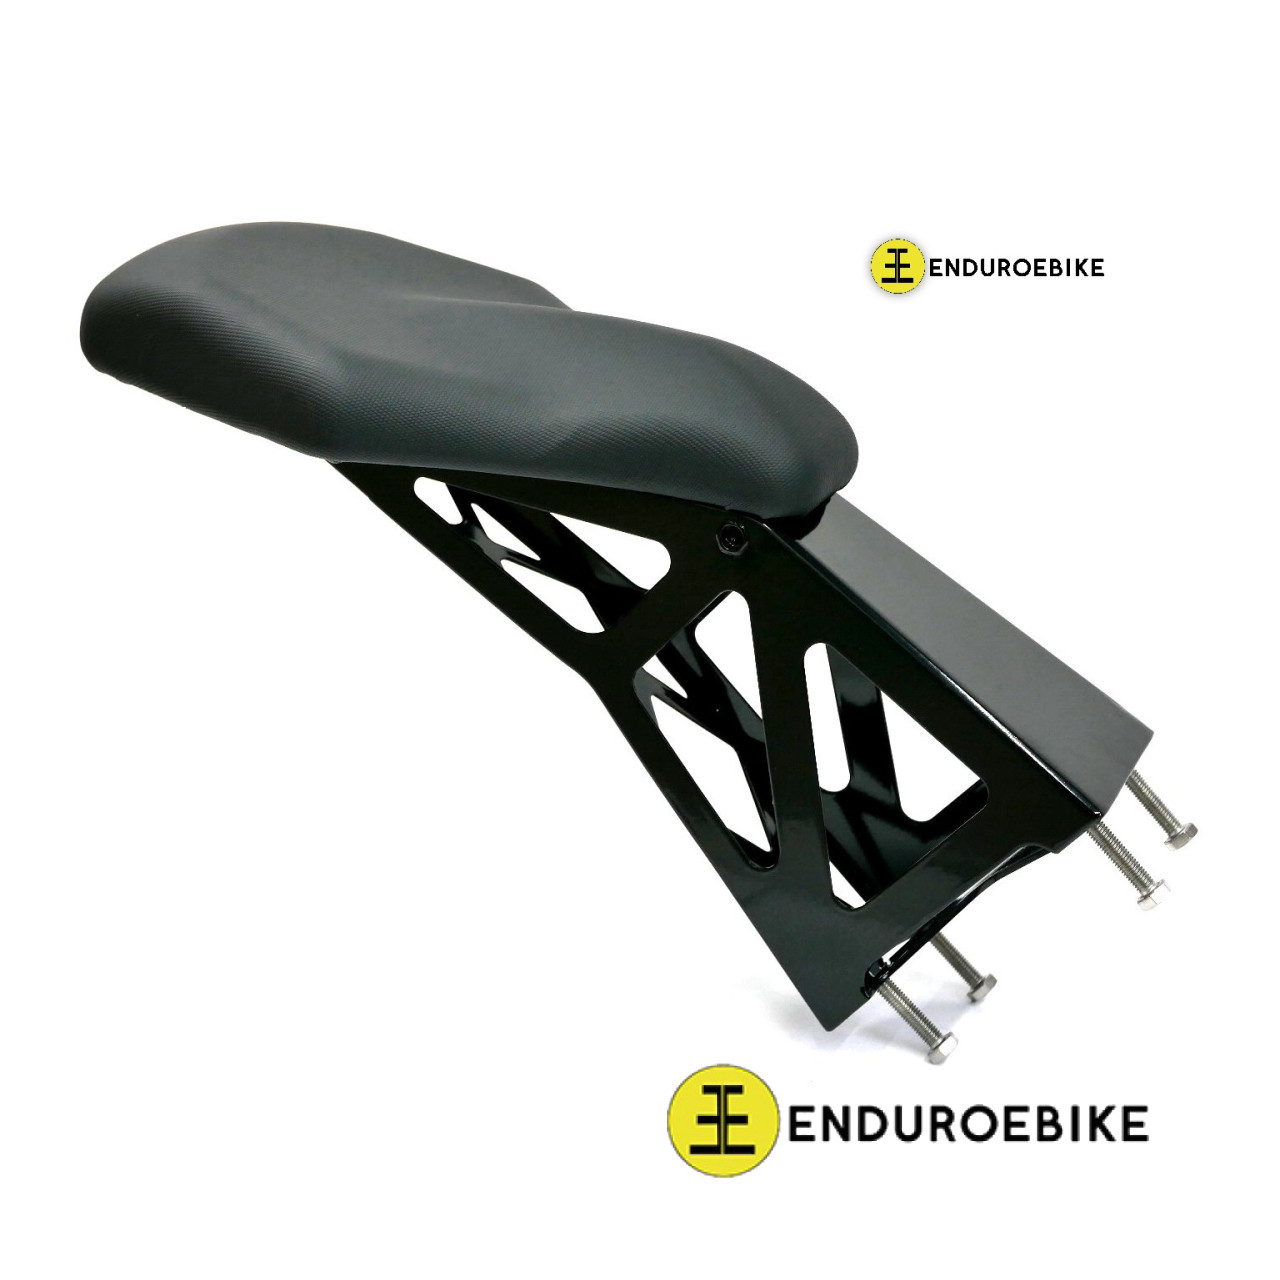 Motorcycle seat Free shipping Enduroebike seat Dirt ebike saddle for sale